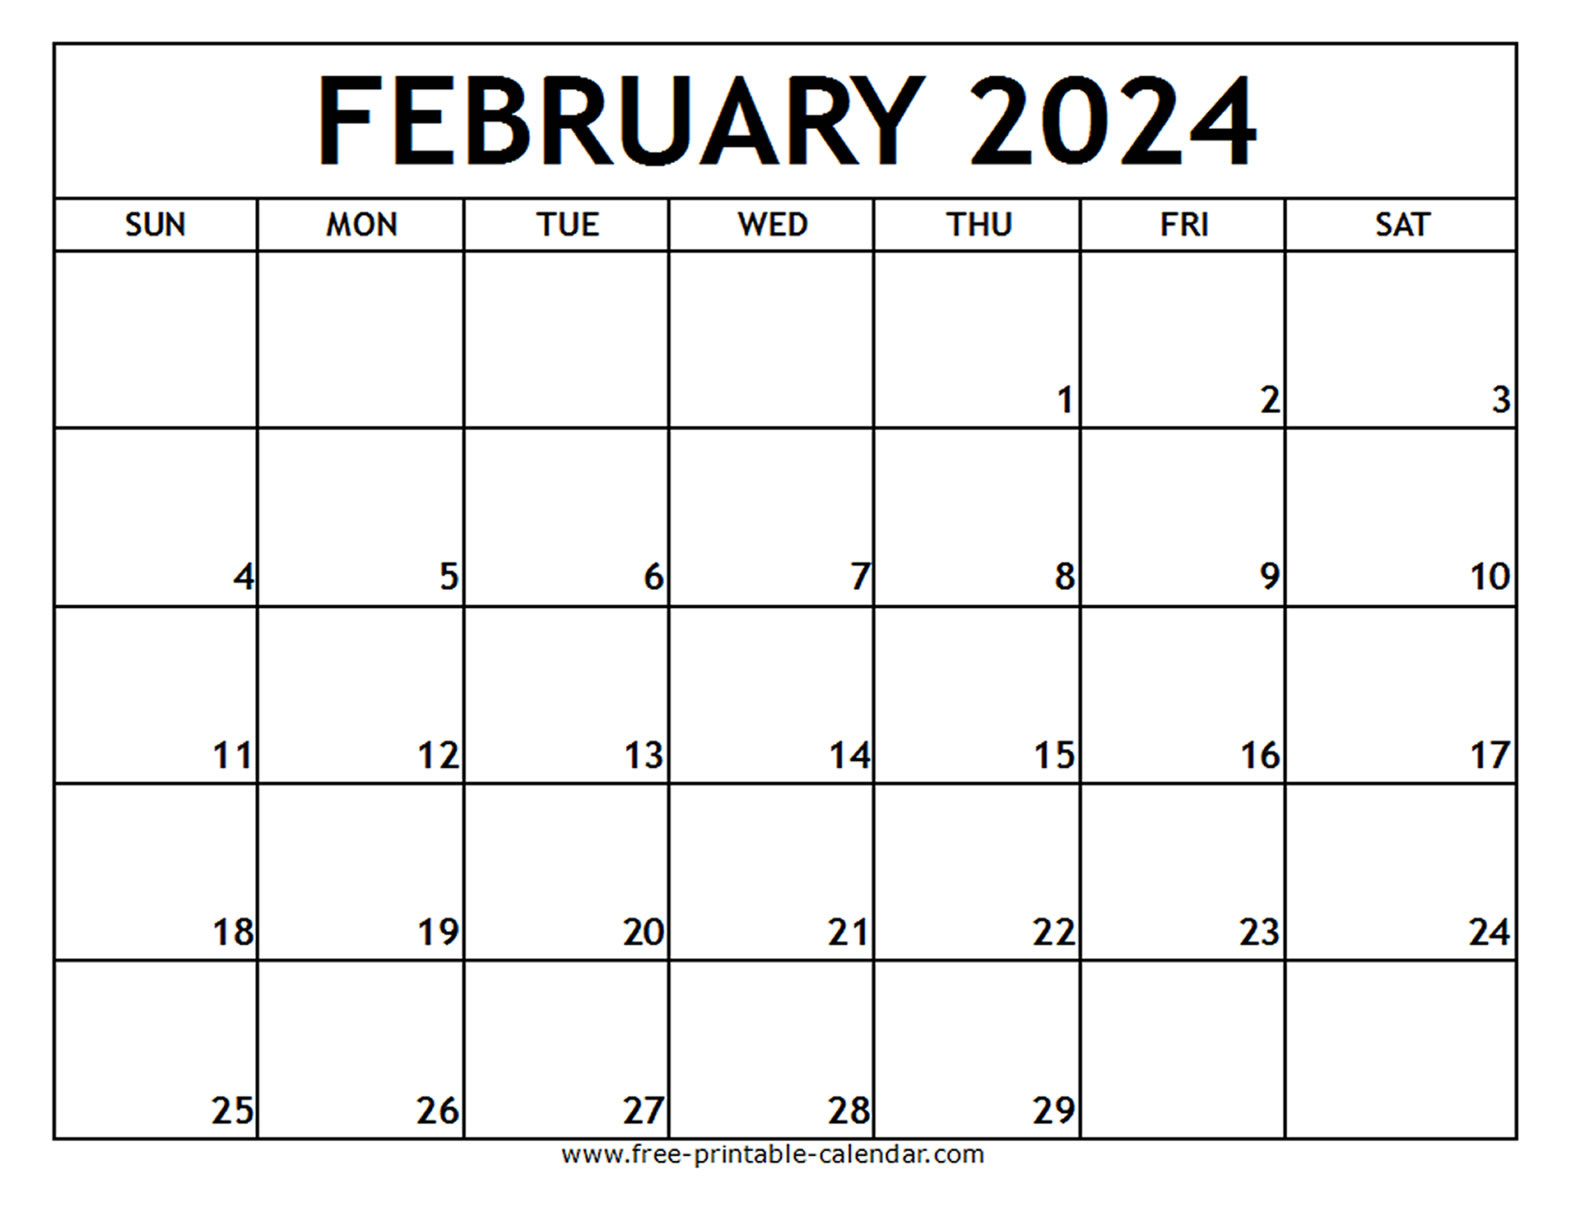 February 2024 Printable Calendar - Free-Printable-Calendar with Free Printable Calendar 2024 Febuary